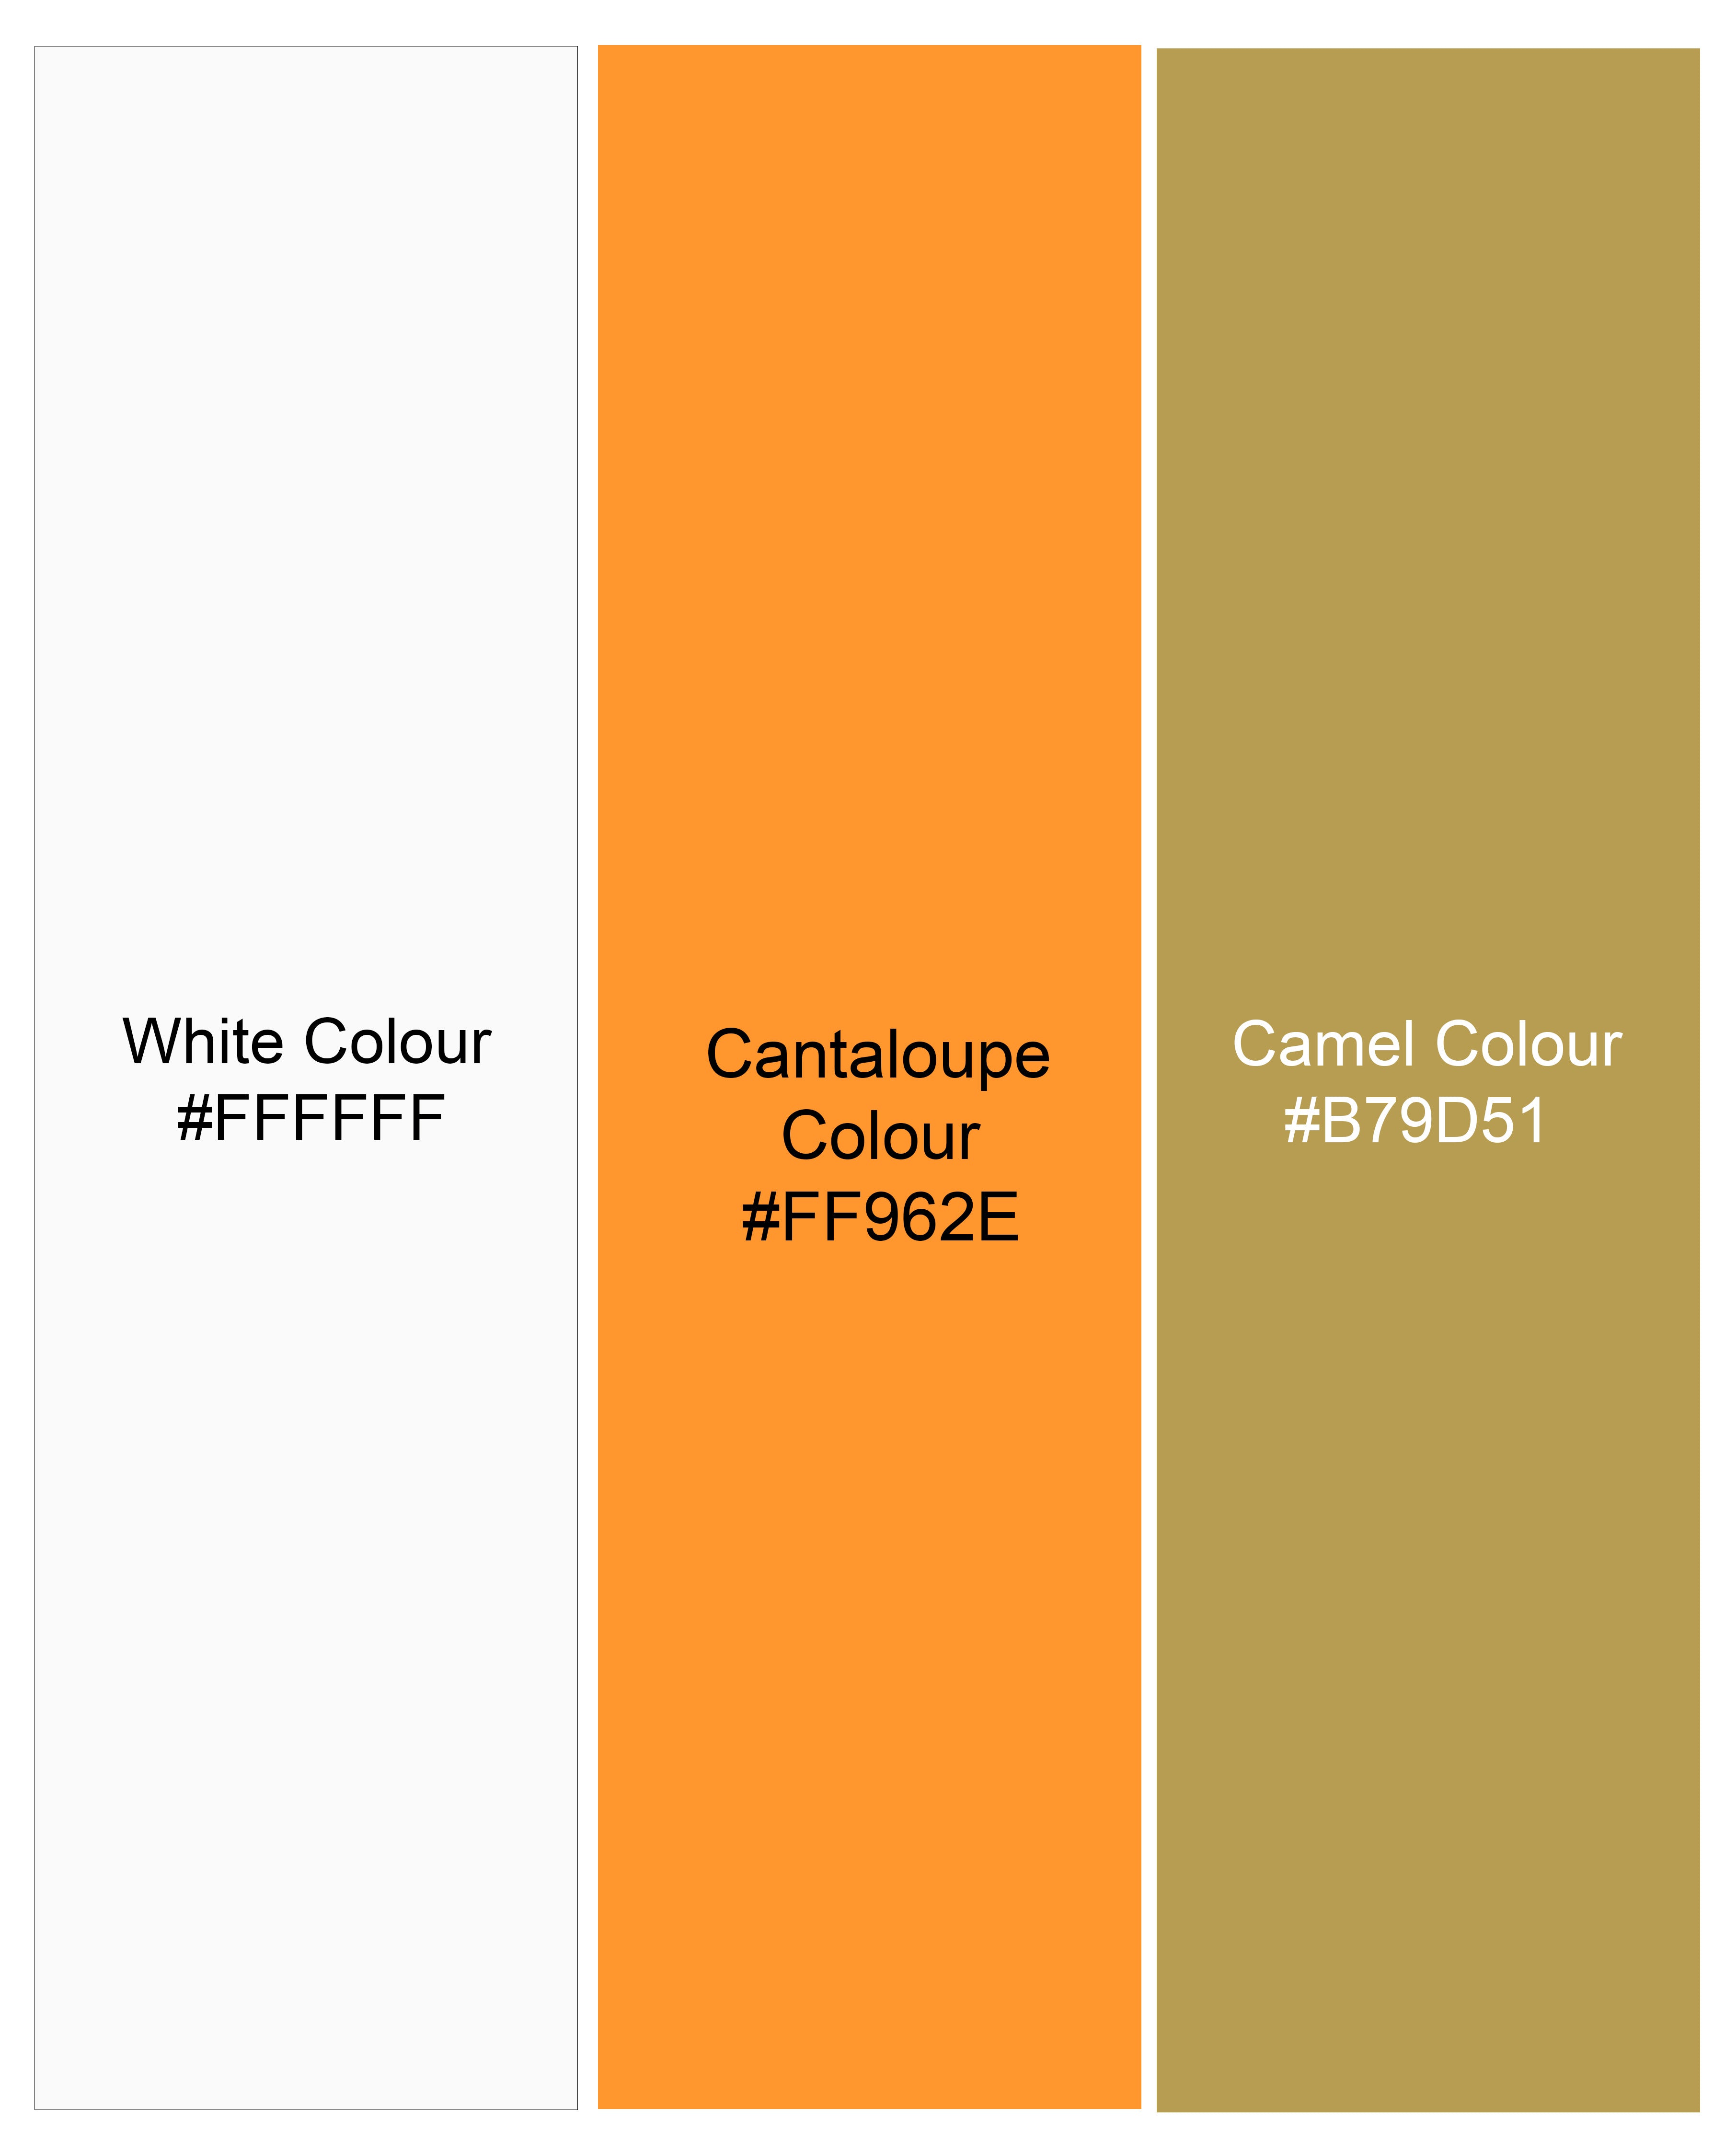 Cantaloupe Orange and White Printed Super Soft Premium Cotton Shorts SR259-28, SR259-30, SR259-32, SR259-34, SR259-36, SR259-38, SR259-40, SR259-42, SR259-44